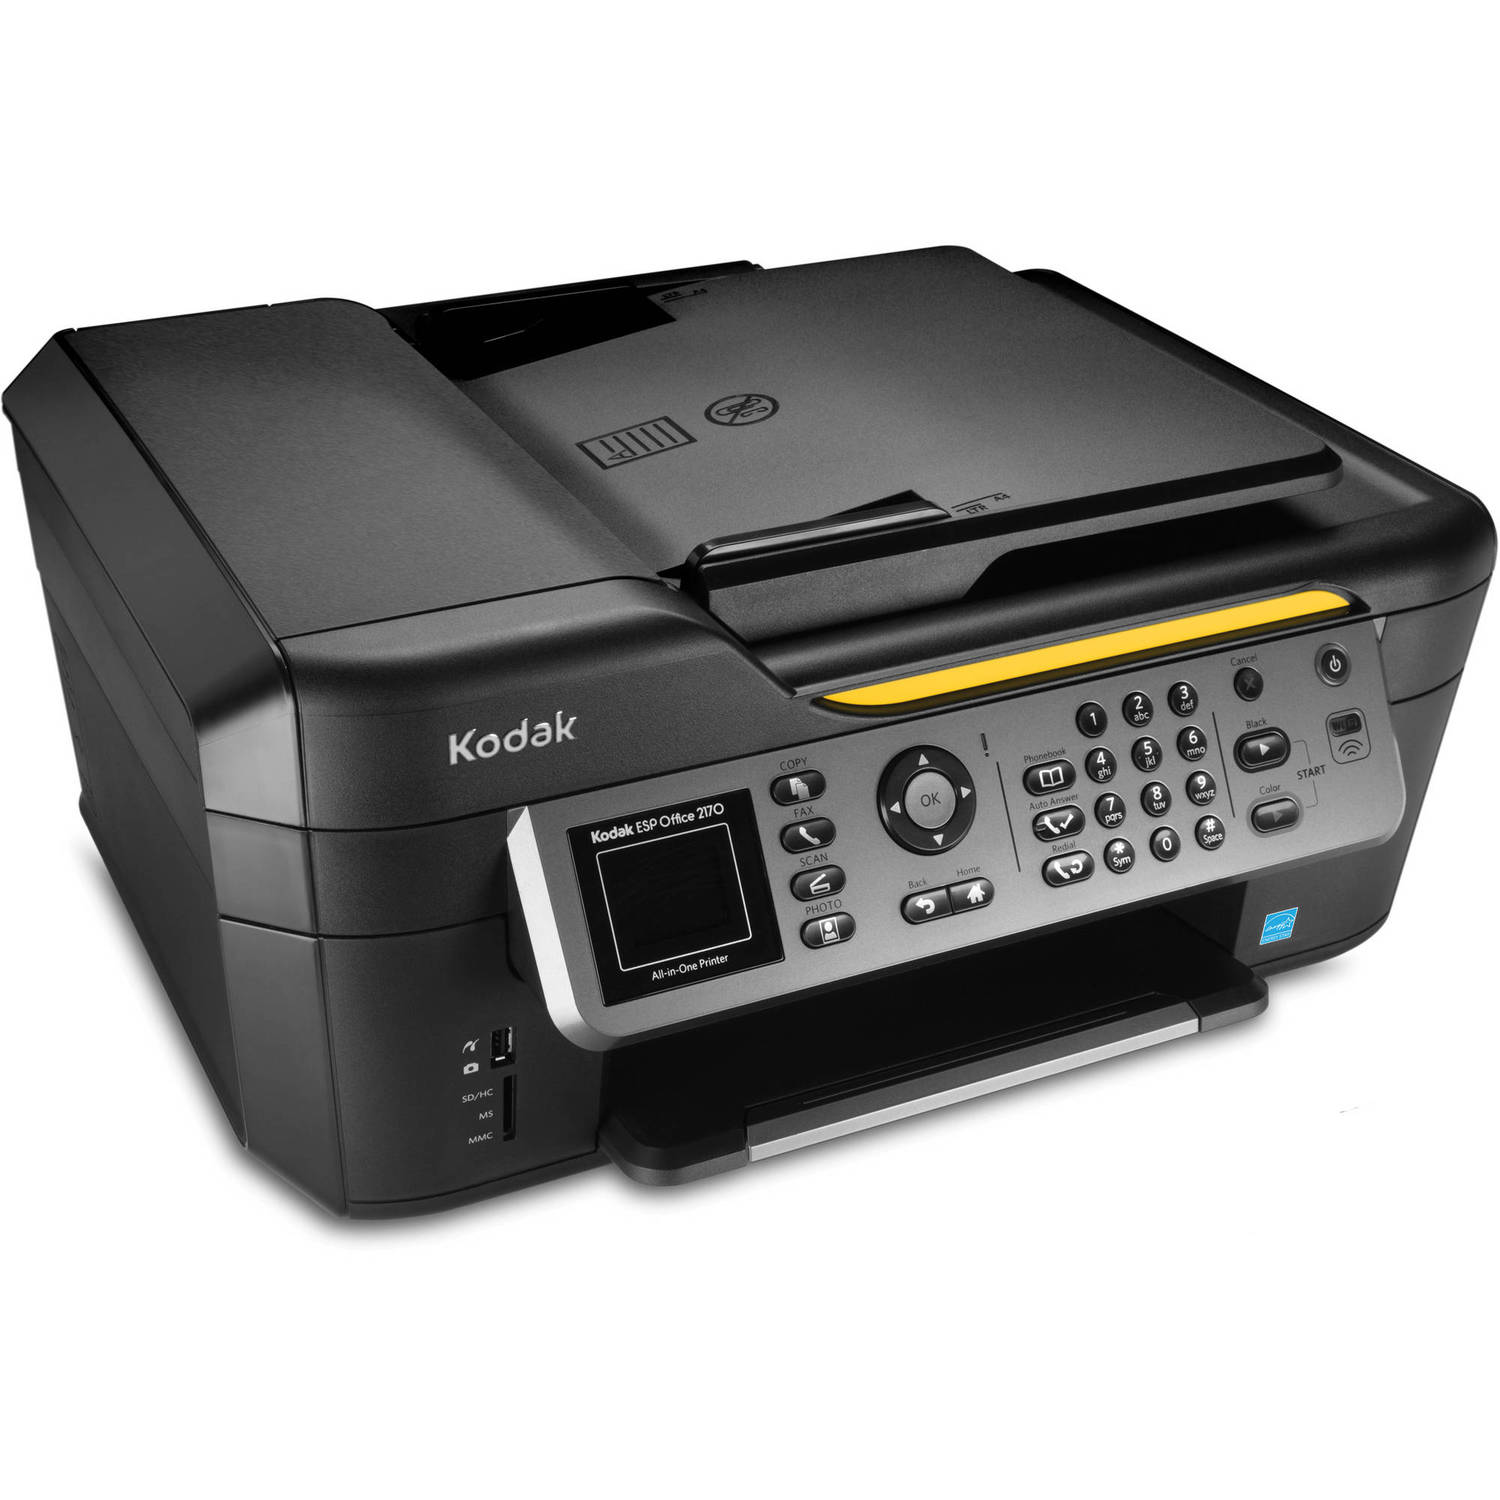 free download kodak printer software